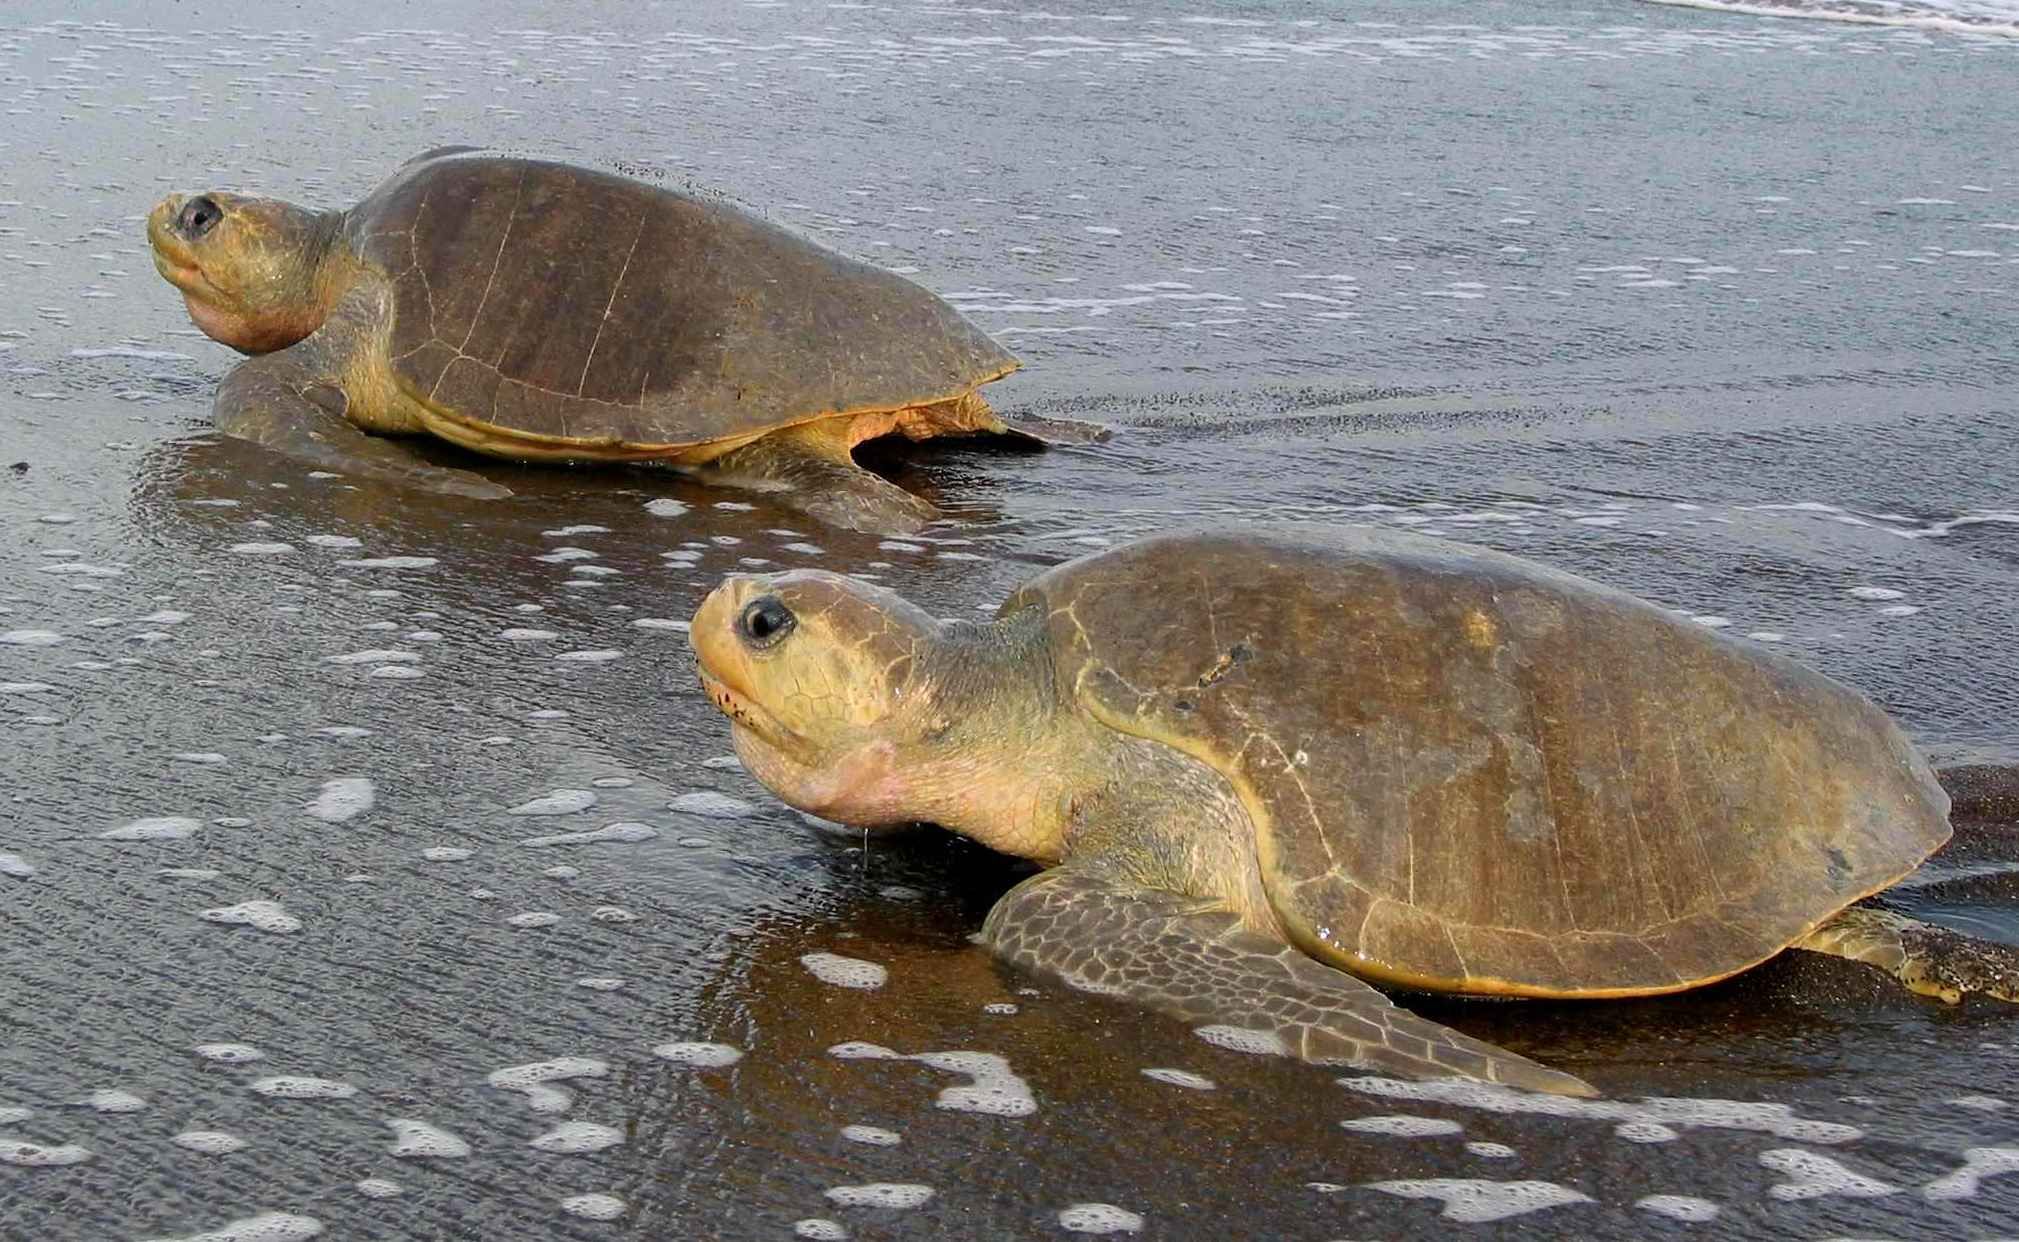 The Amazing Sea Turtle Arrivals in Costa Rica